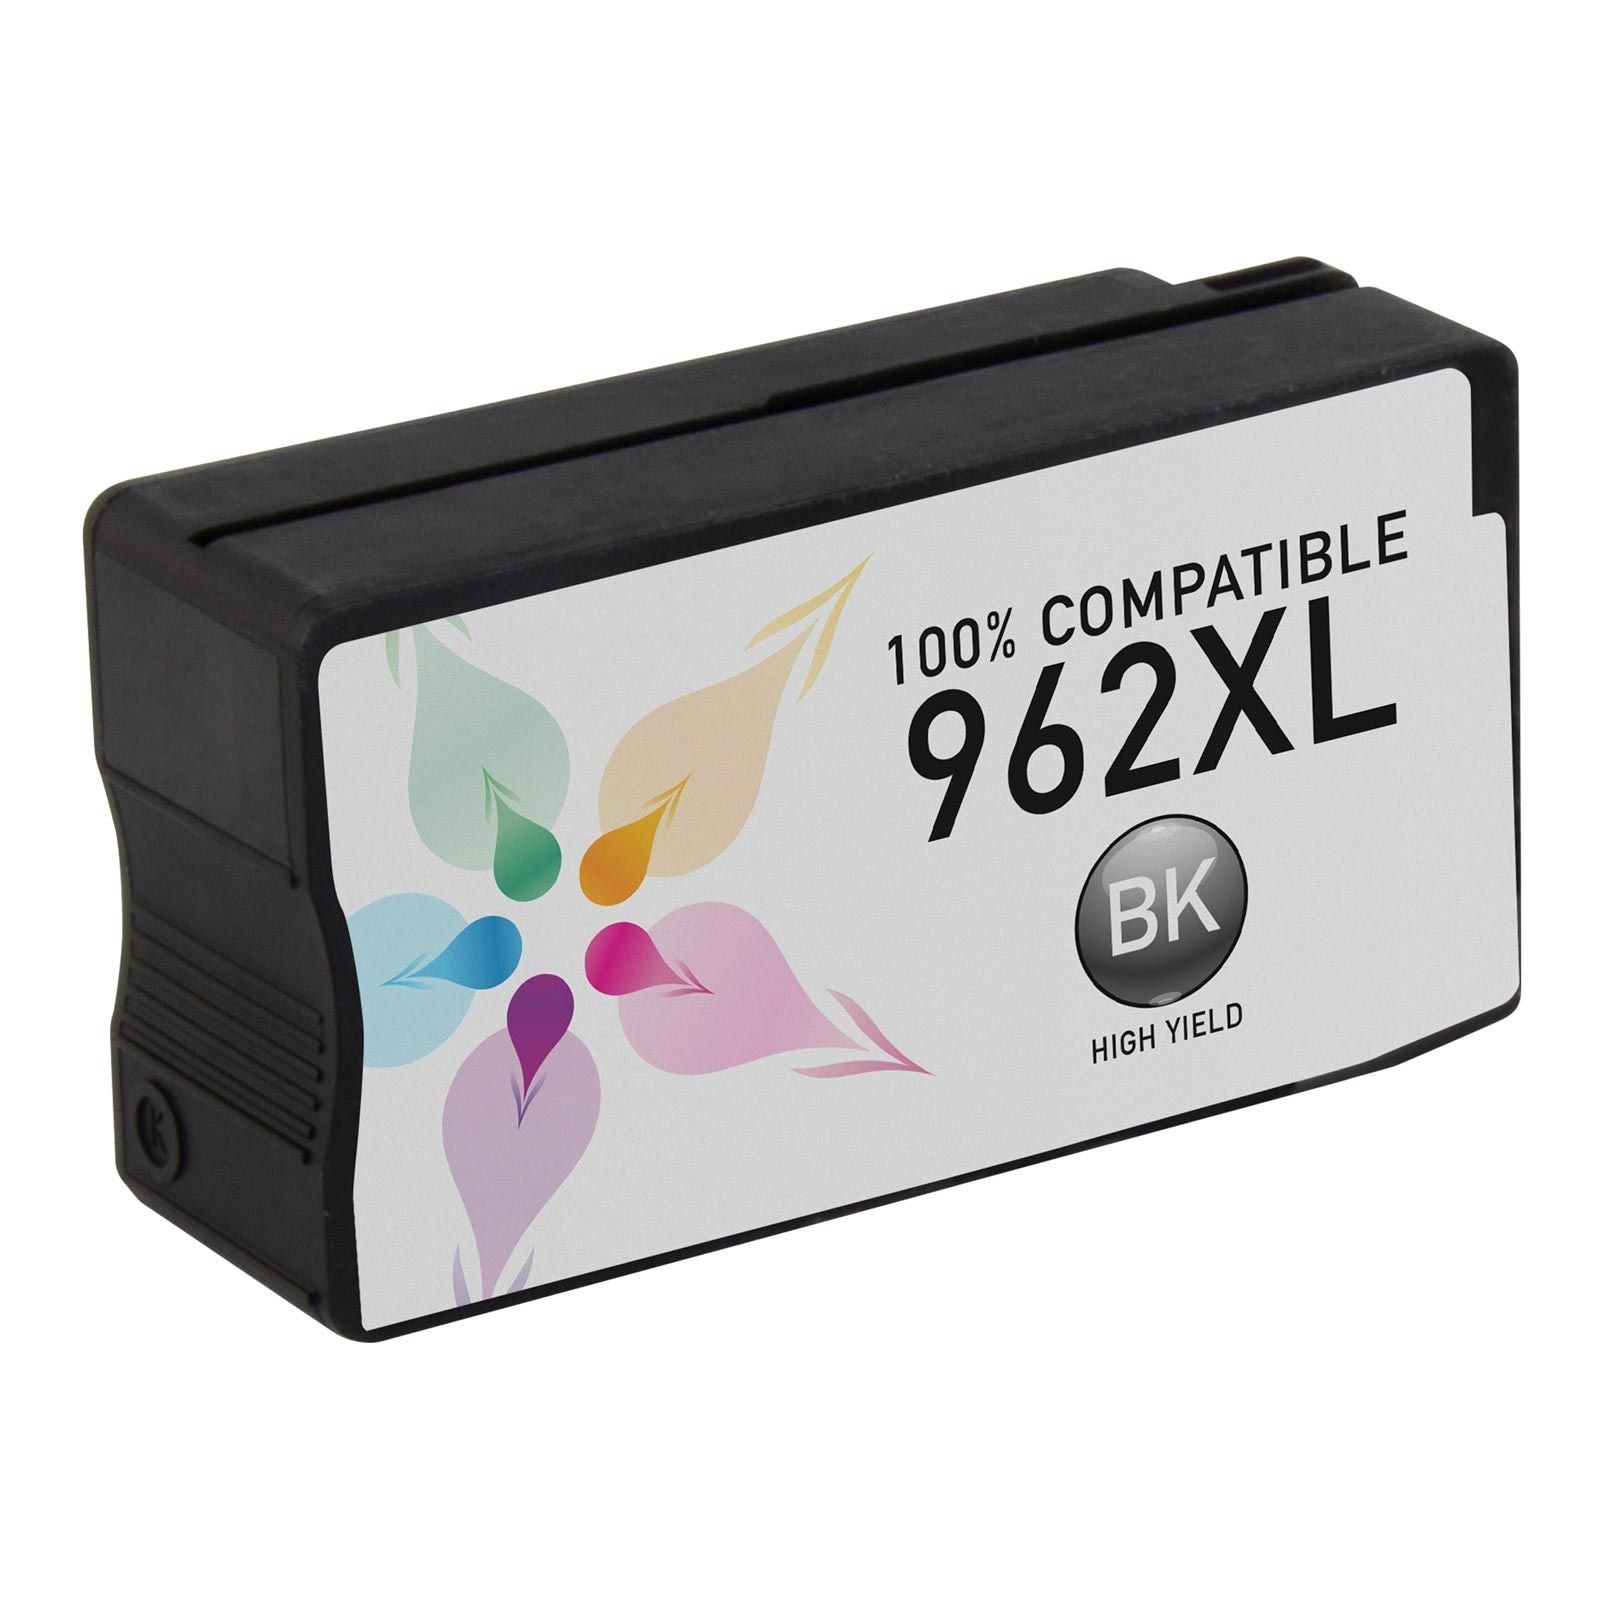 IMPERIAL BRAND Compatible ink cartridge for HP 962XL BLACK INKJET CRTG